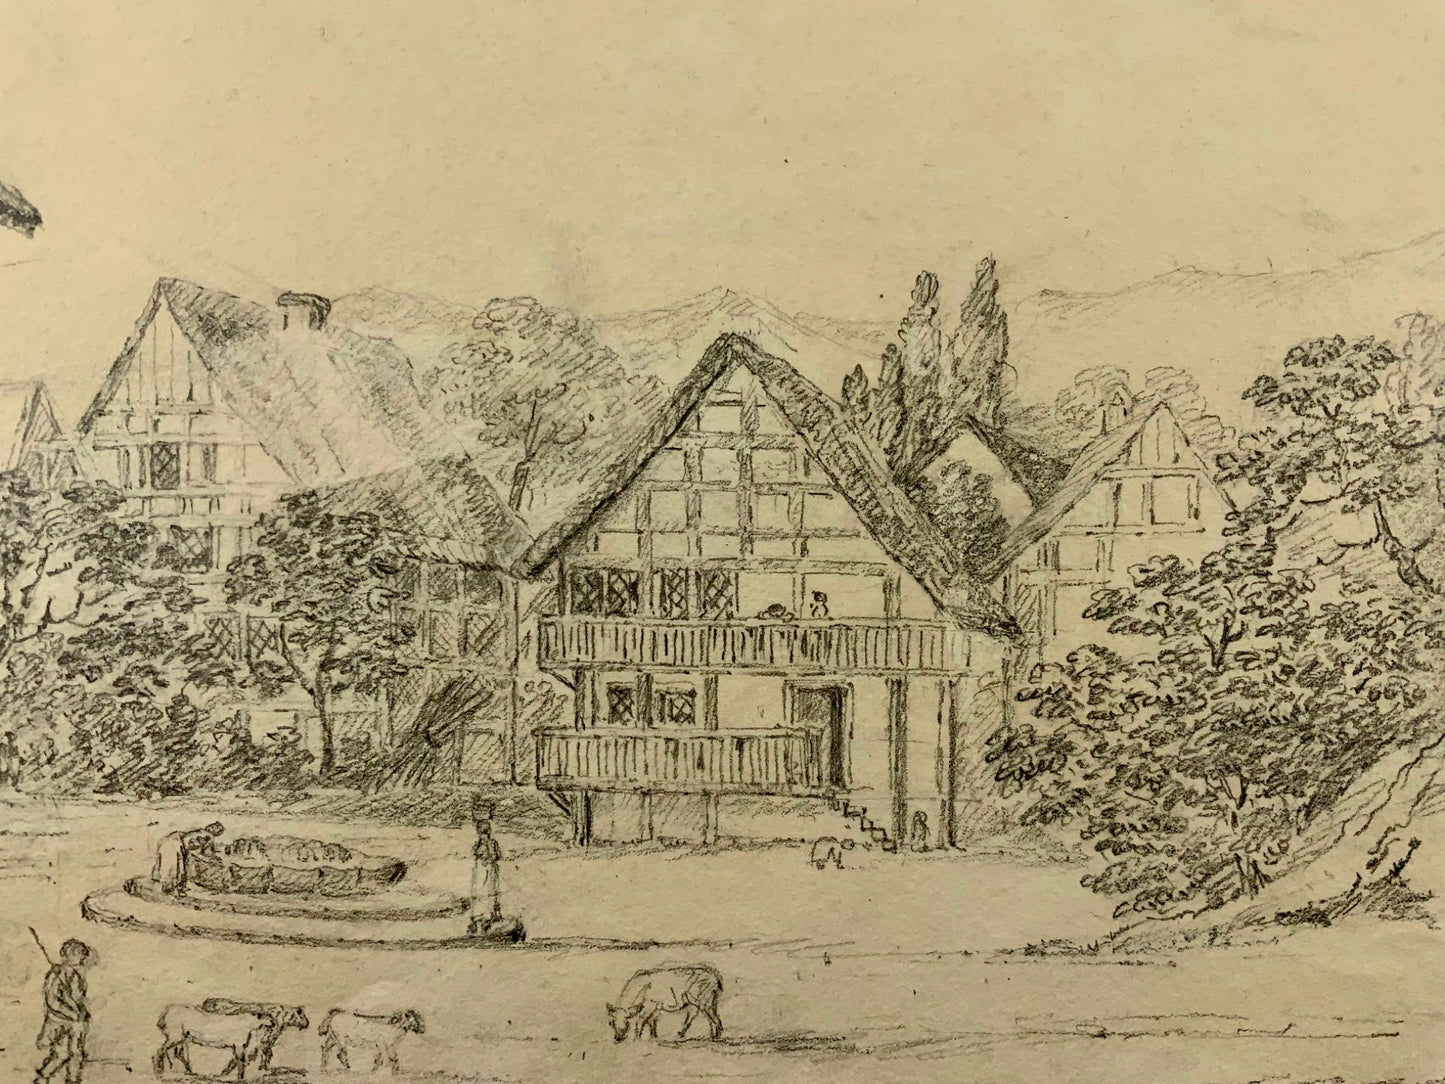 1816 pencil drawing of Herzogenbuchsee in Switzerland